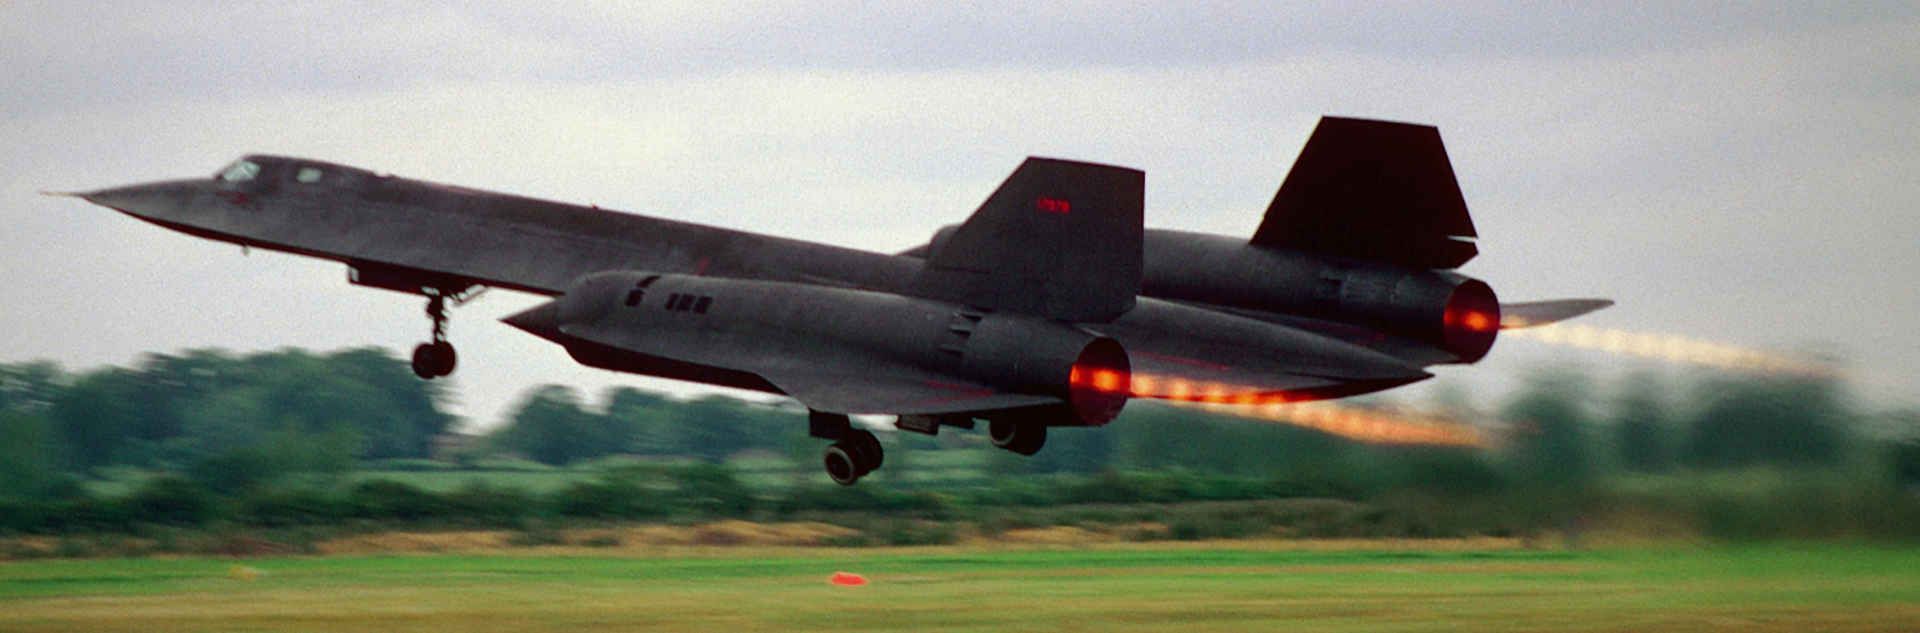 The SR-71 Blackbird